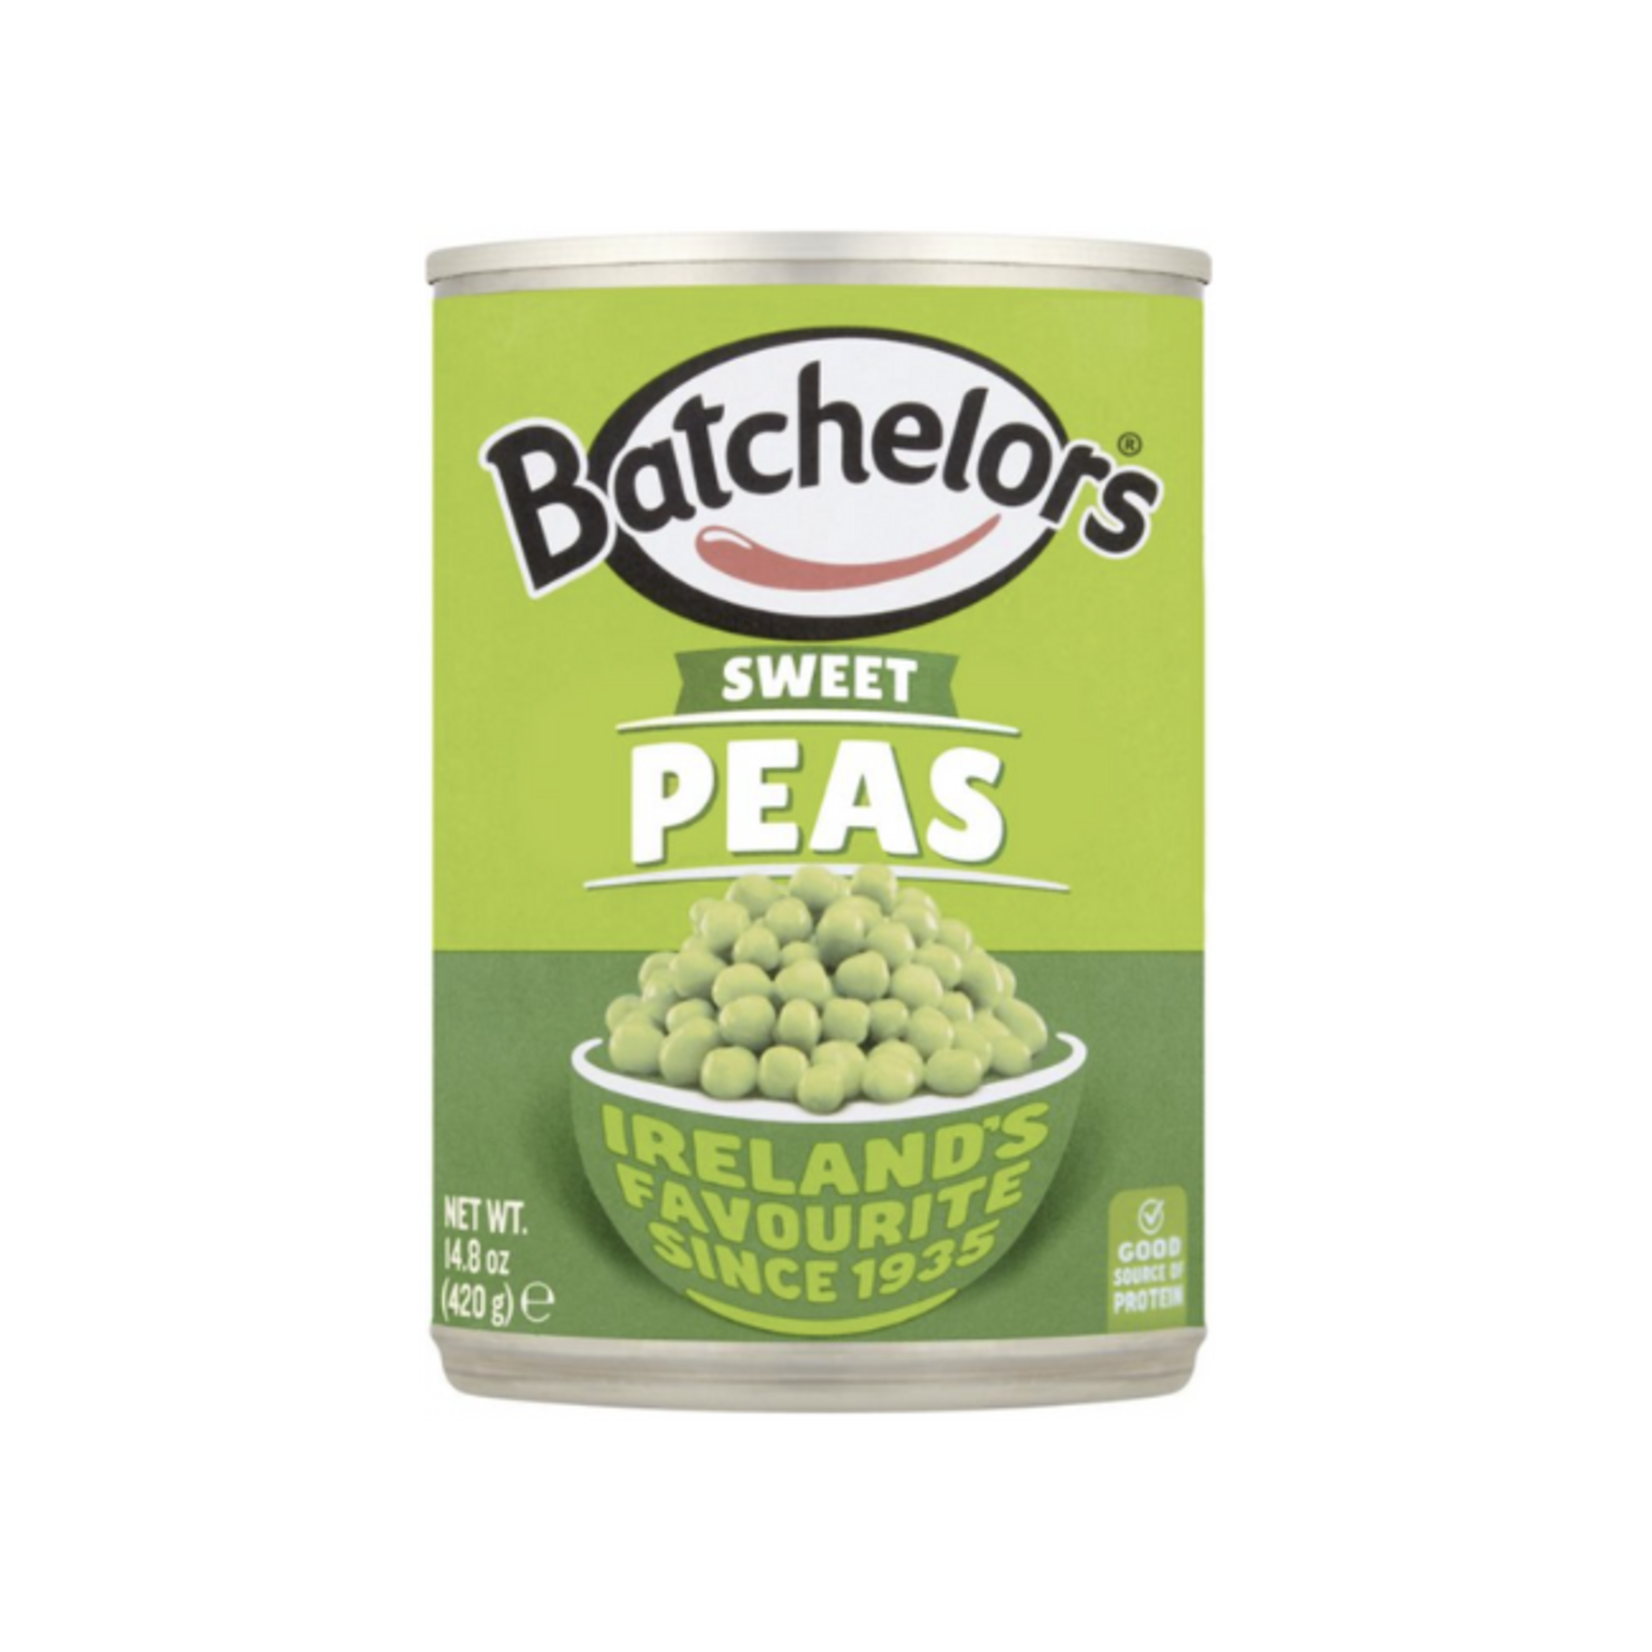 Batchelors Batchelors Irish Peas 420g Can